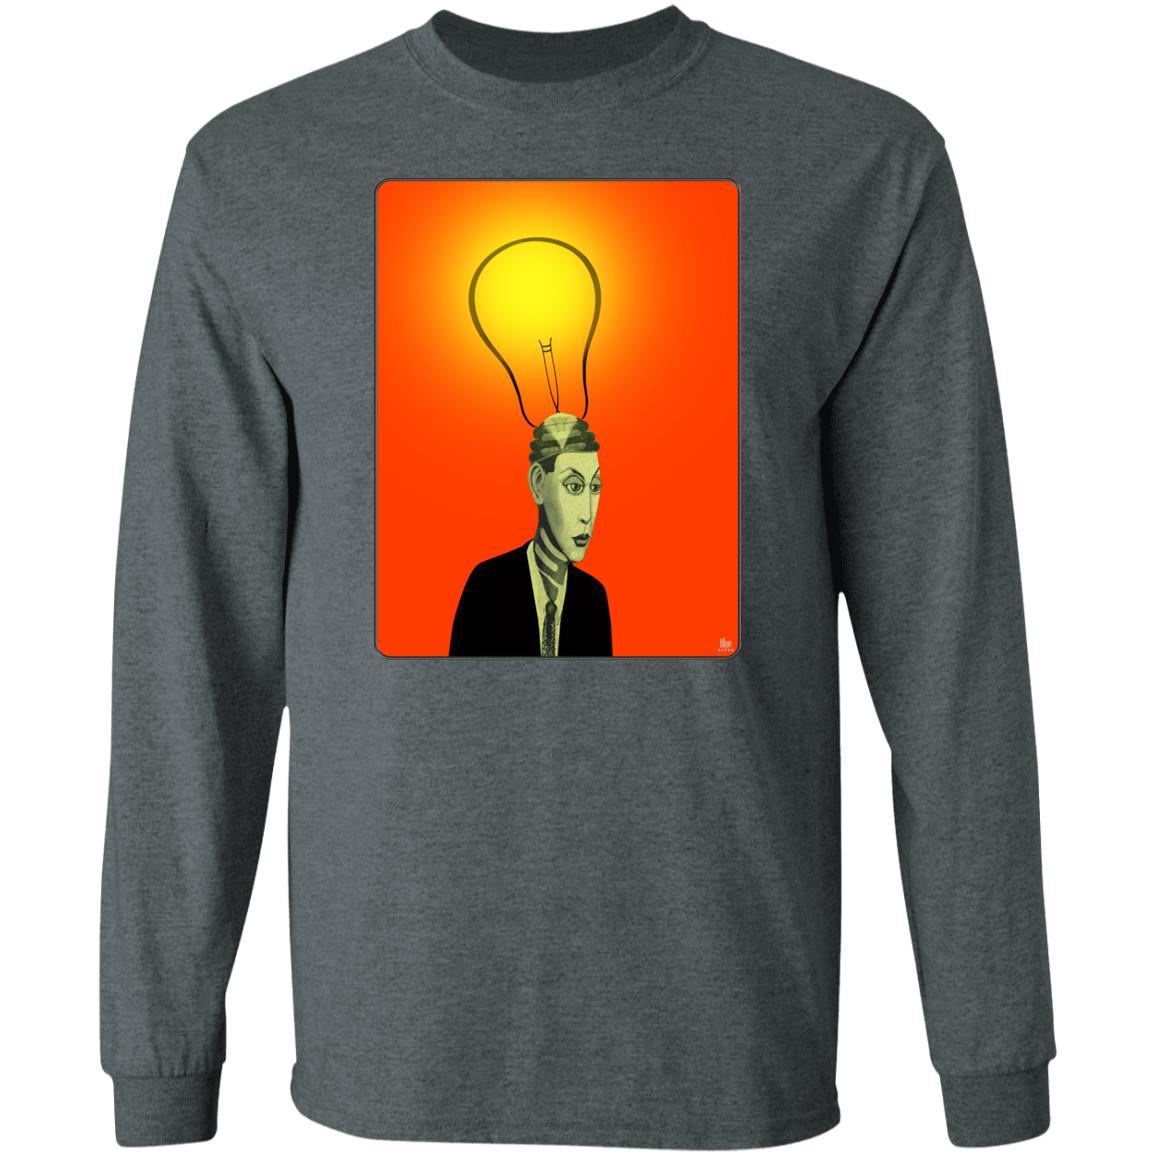 Bright Idea - Men's Long Sleeve T-Shirt